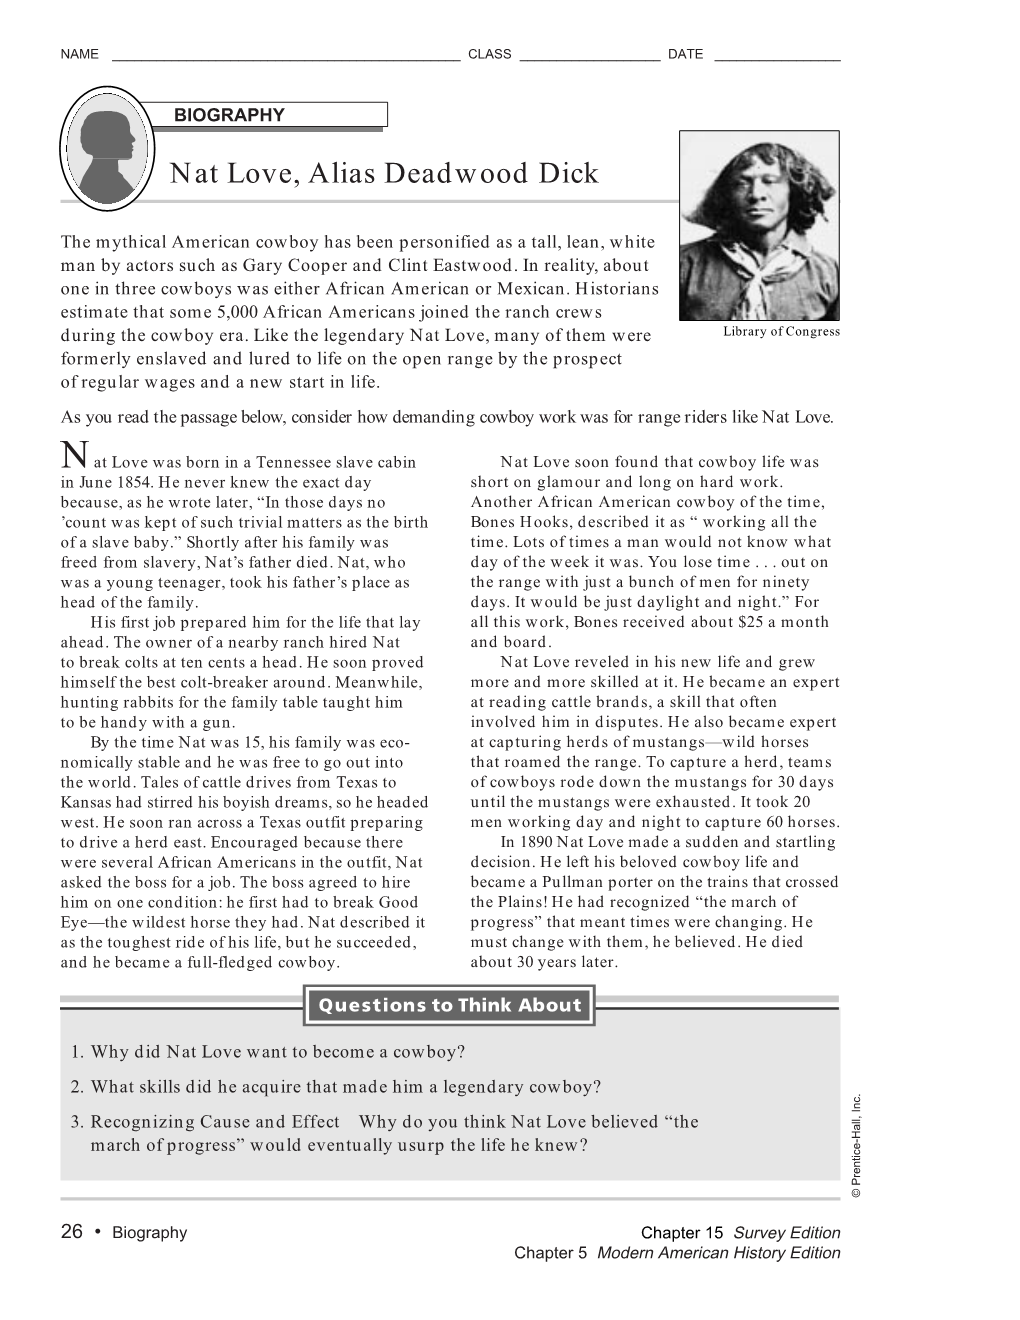 Biography Activity: Nat Love, Alias Deadwood Dick